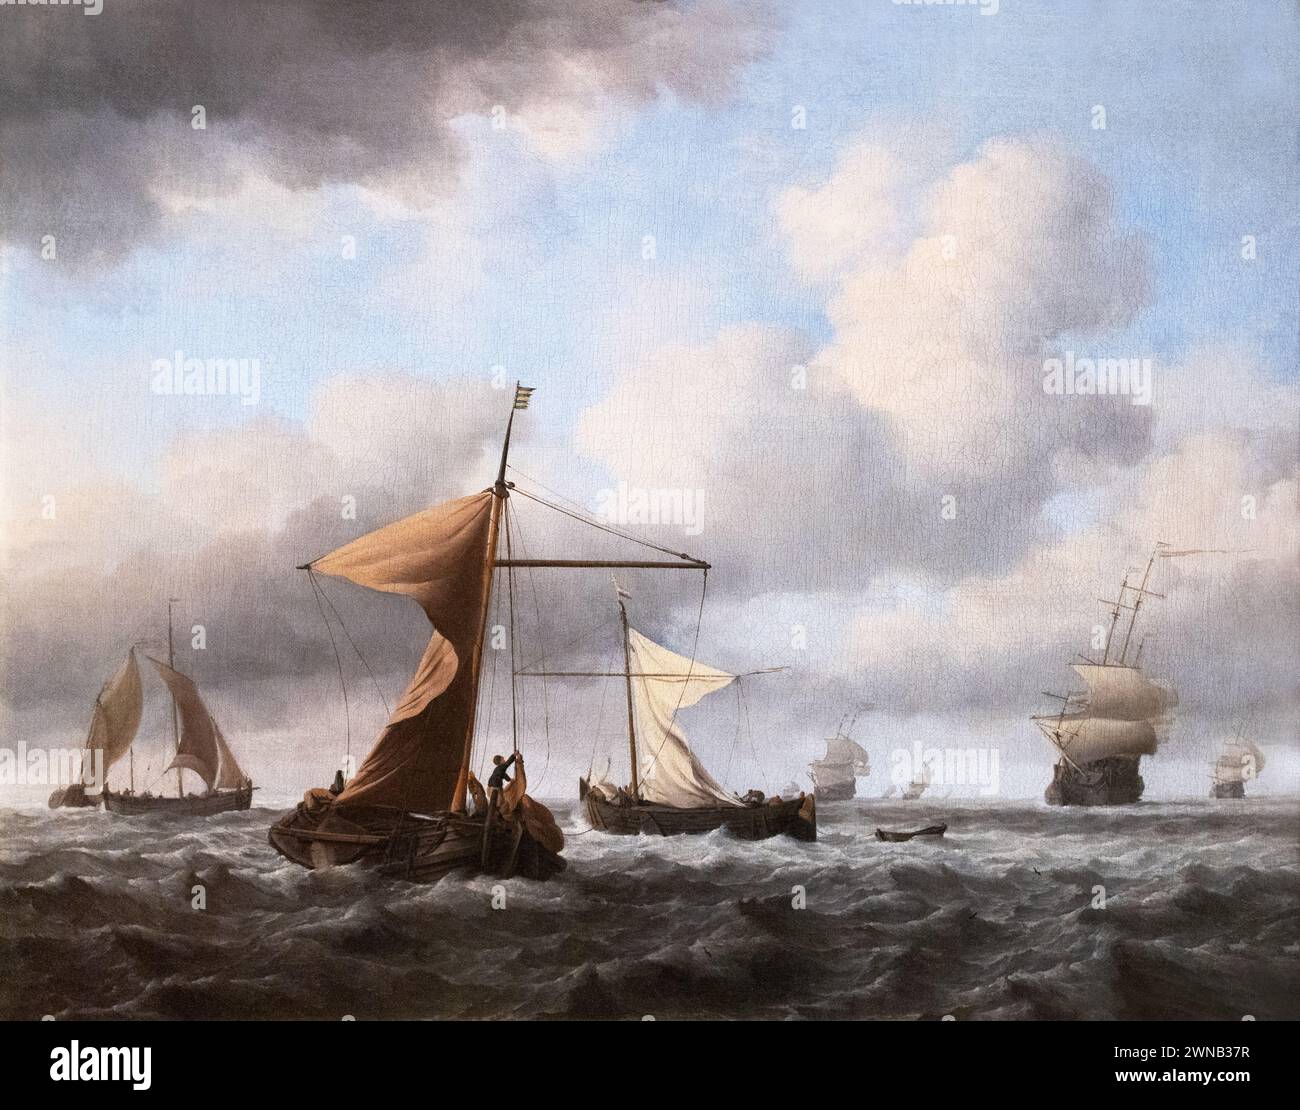 Willem van de Velde das jüngere Gemälde; „Eine lebendige Brise“, um 1665 Meereslandschaft; niederländischer Meeresmaler und -Malerei, 1600er-17. Jahrhundert Stockfoto